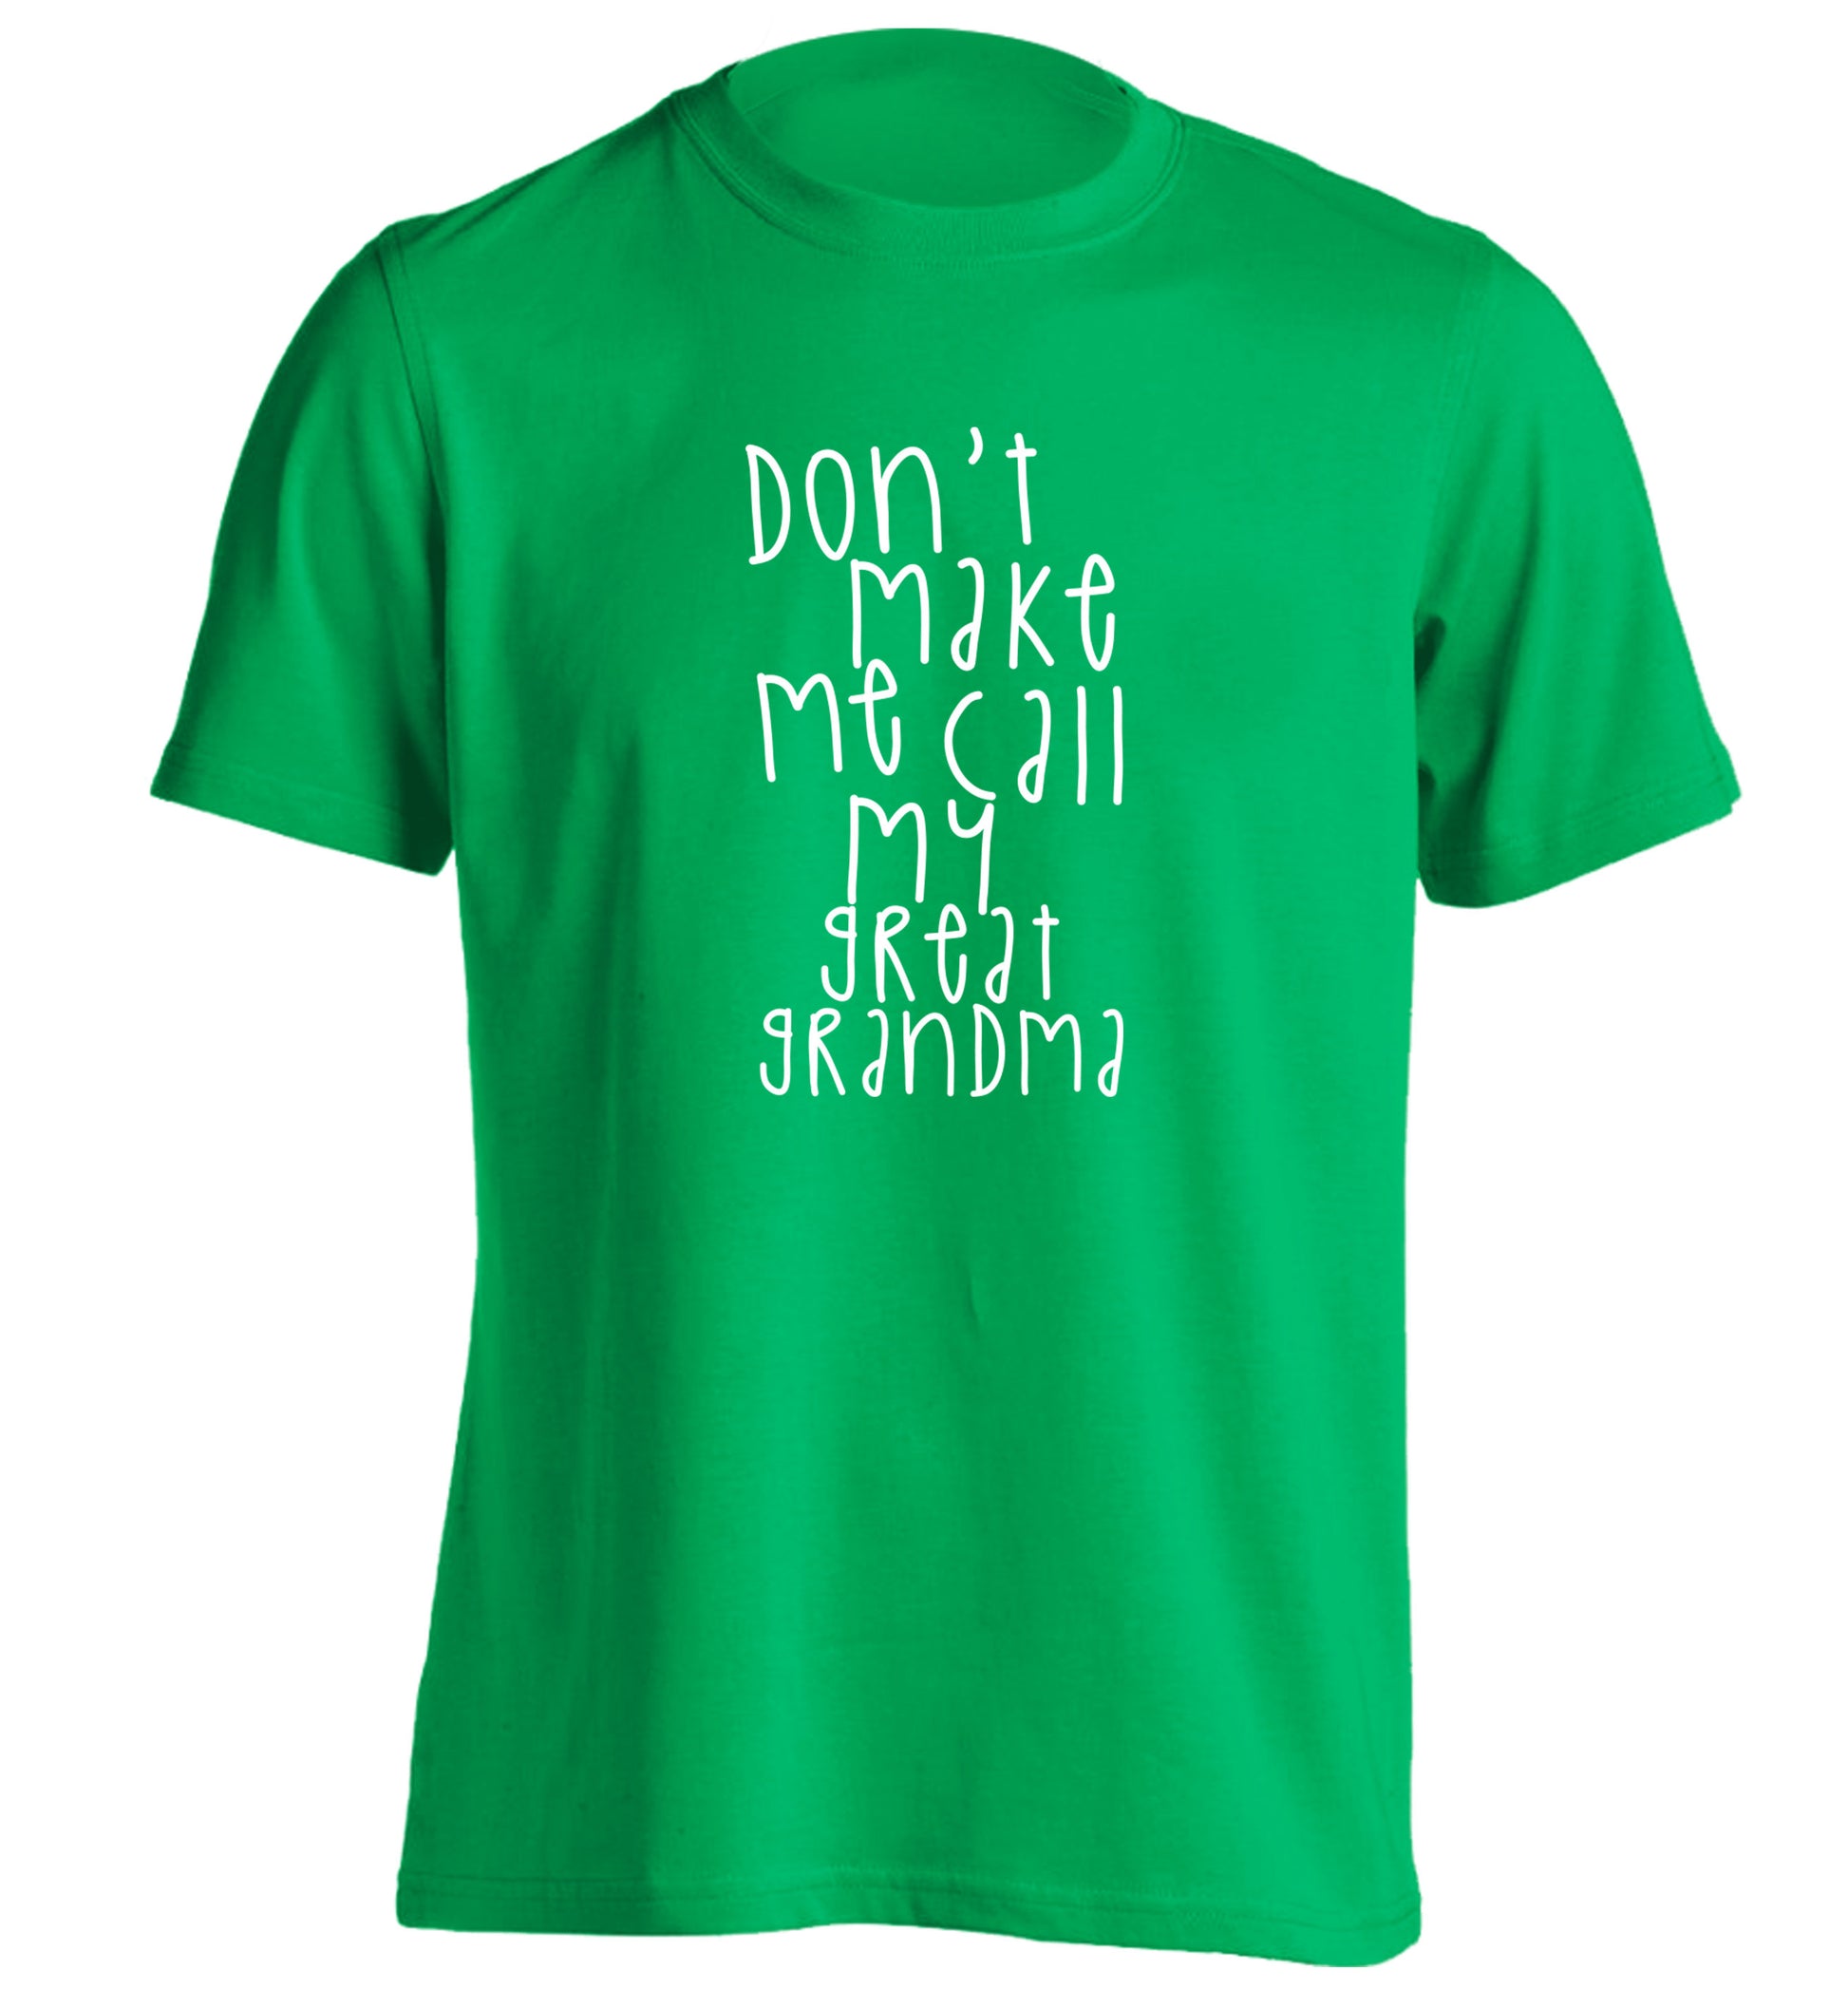 Don't make me call my great grandma adults unisex green Tshirt 2XL